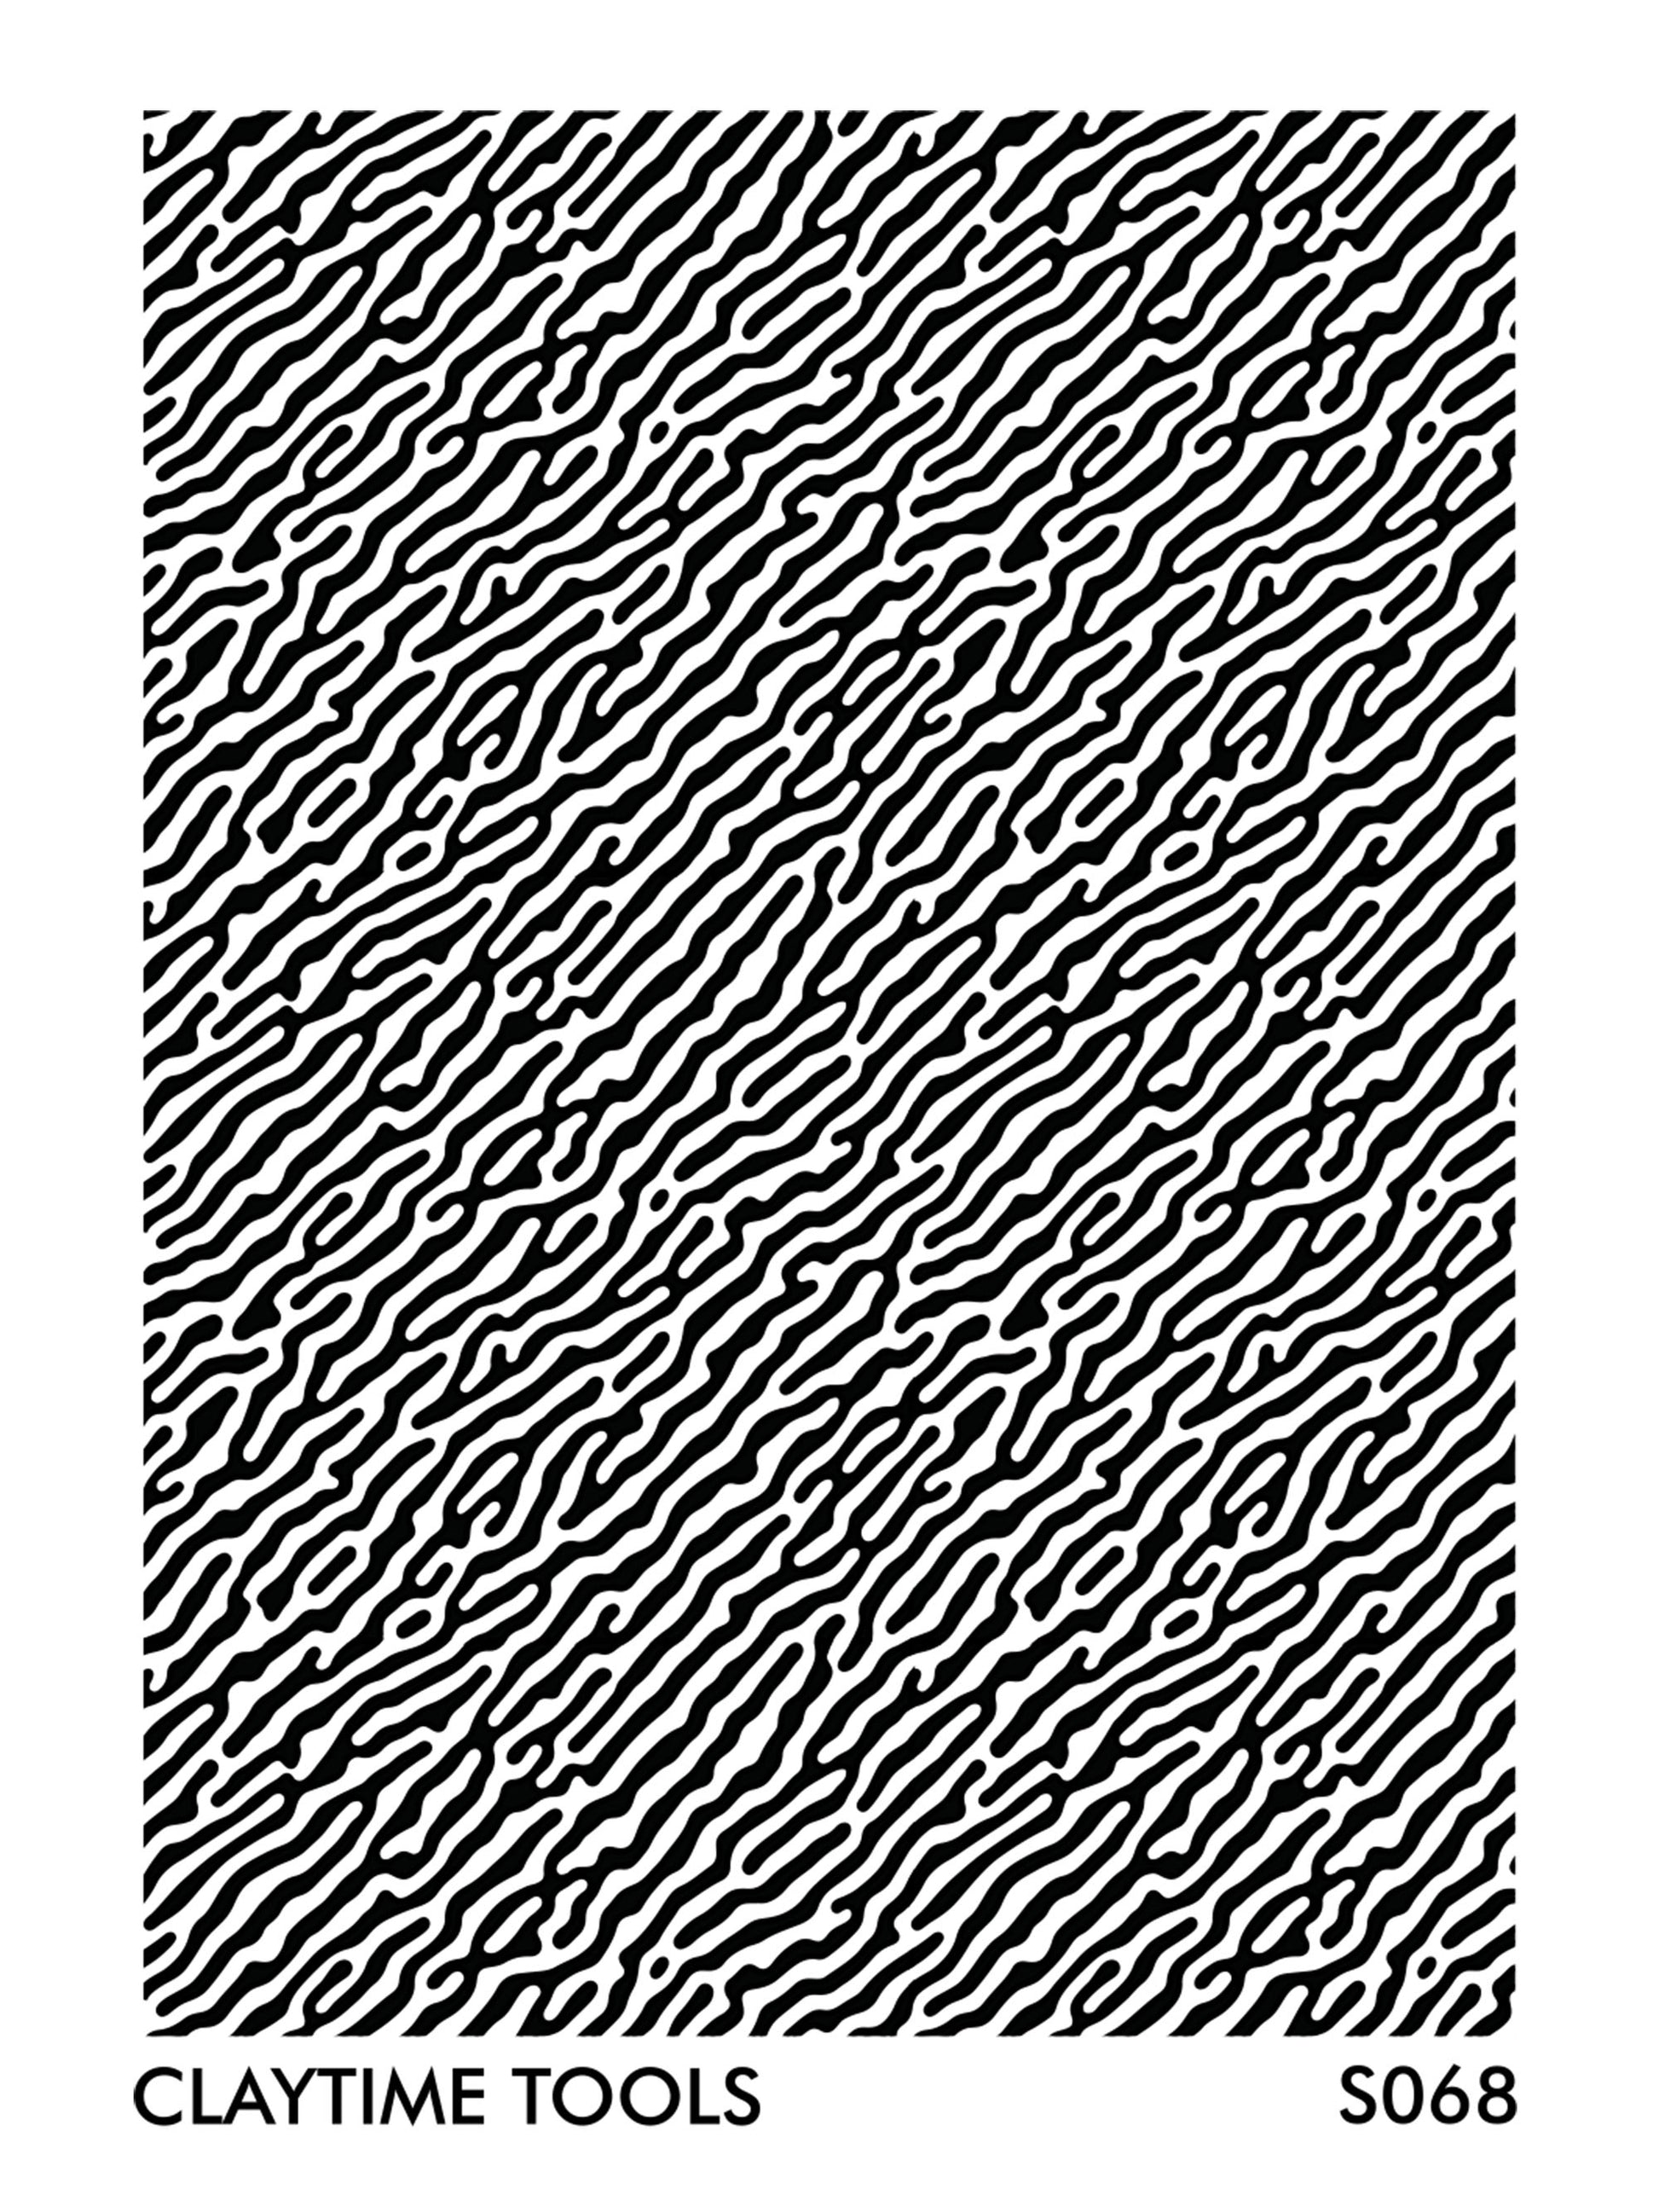 Image of a silkscreen print featuring an organic, abstract texture.